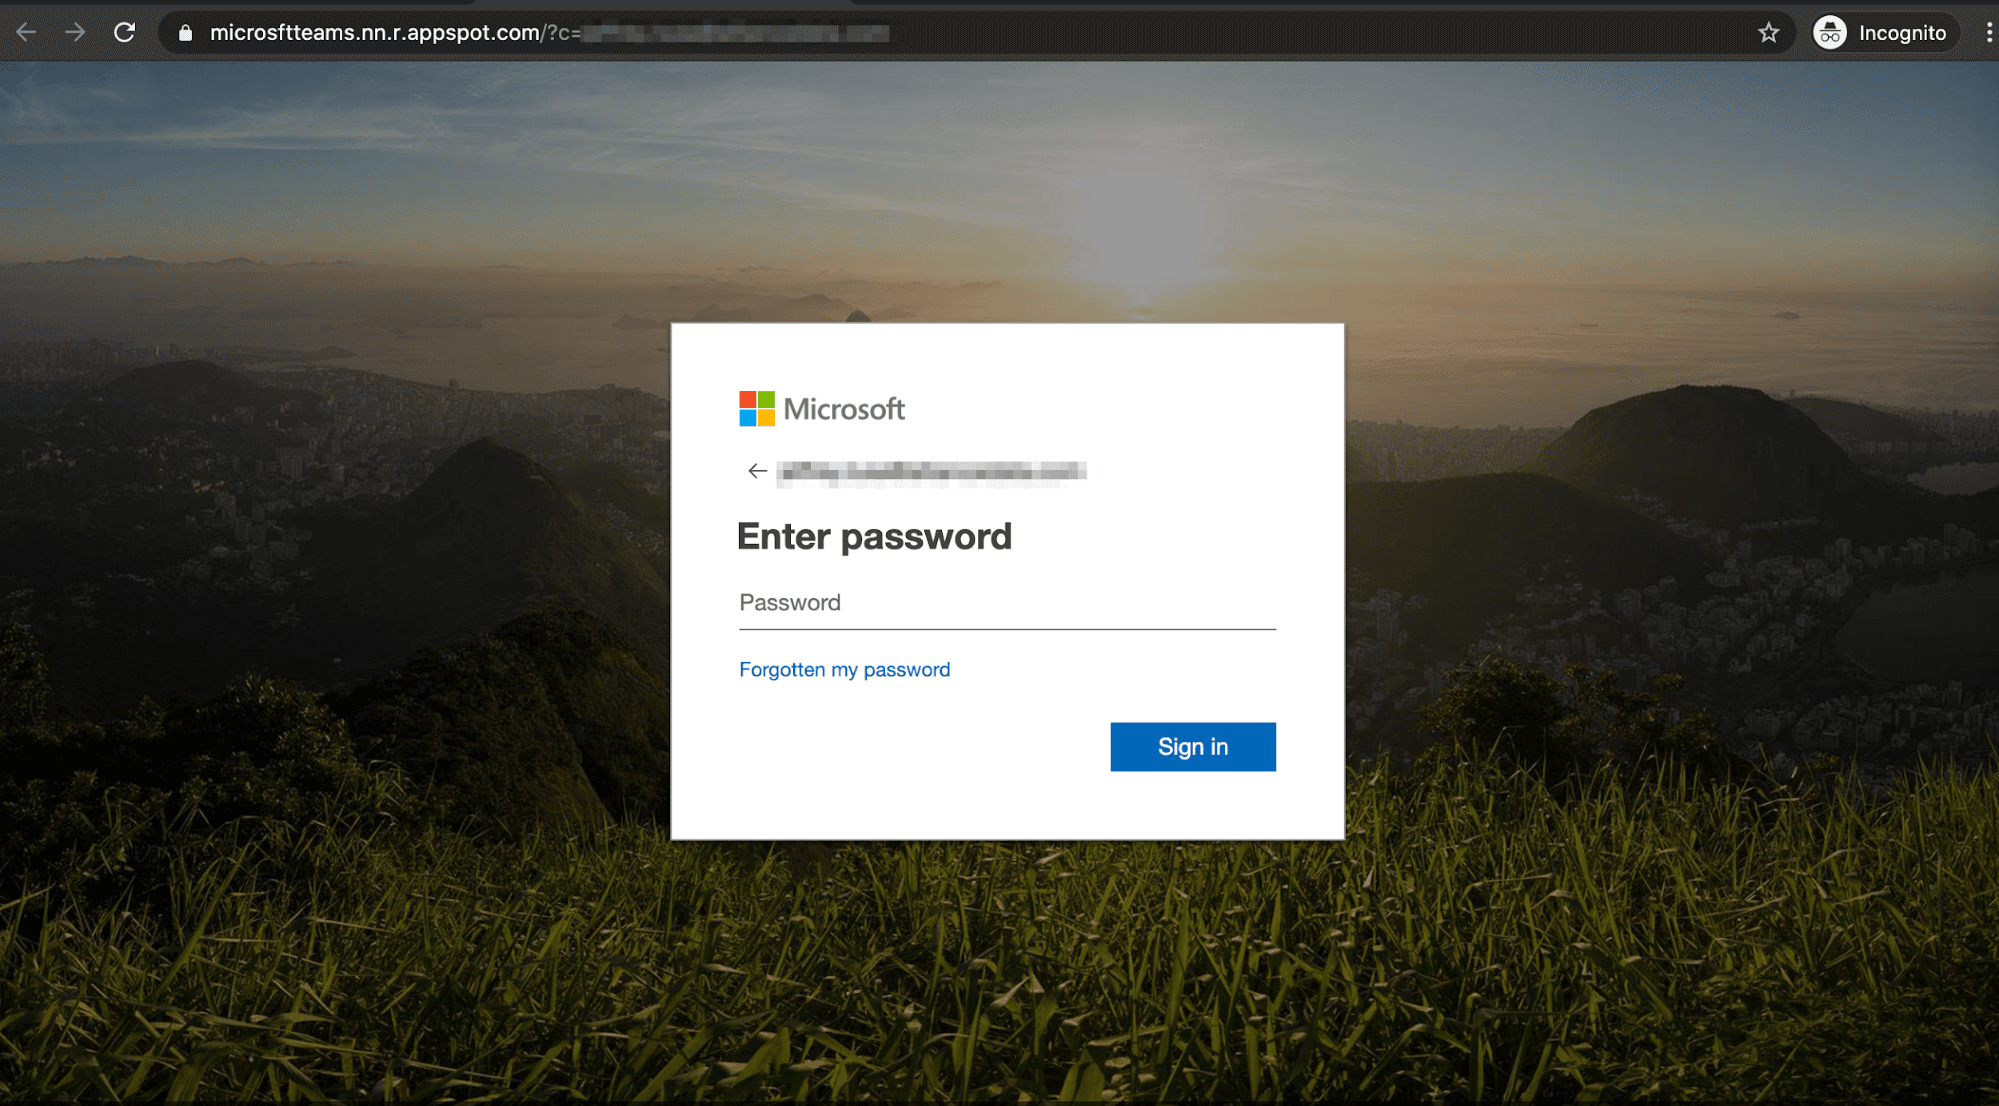 Fake Microsoft Office login scam